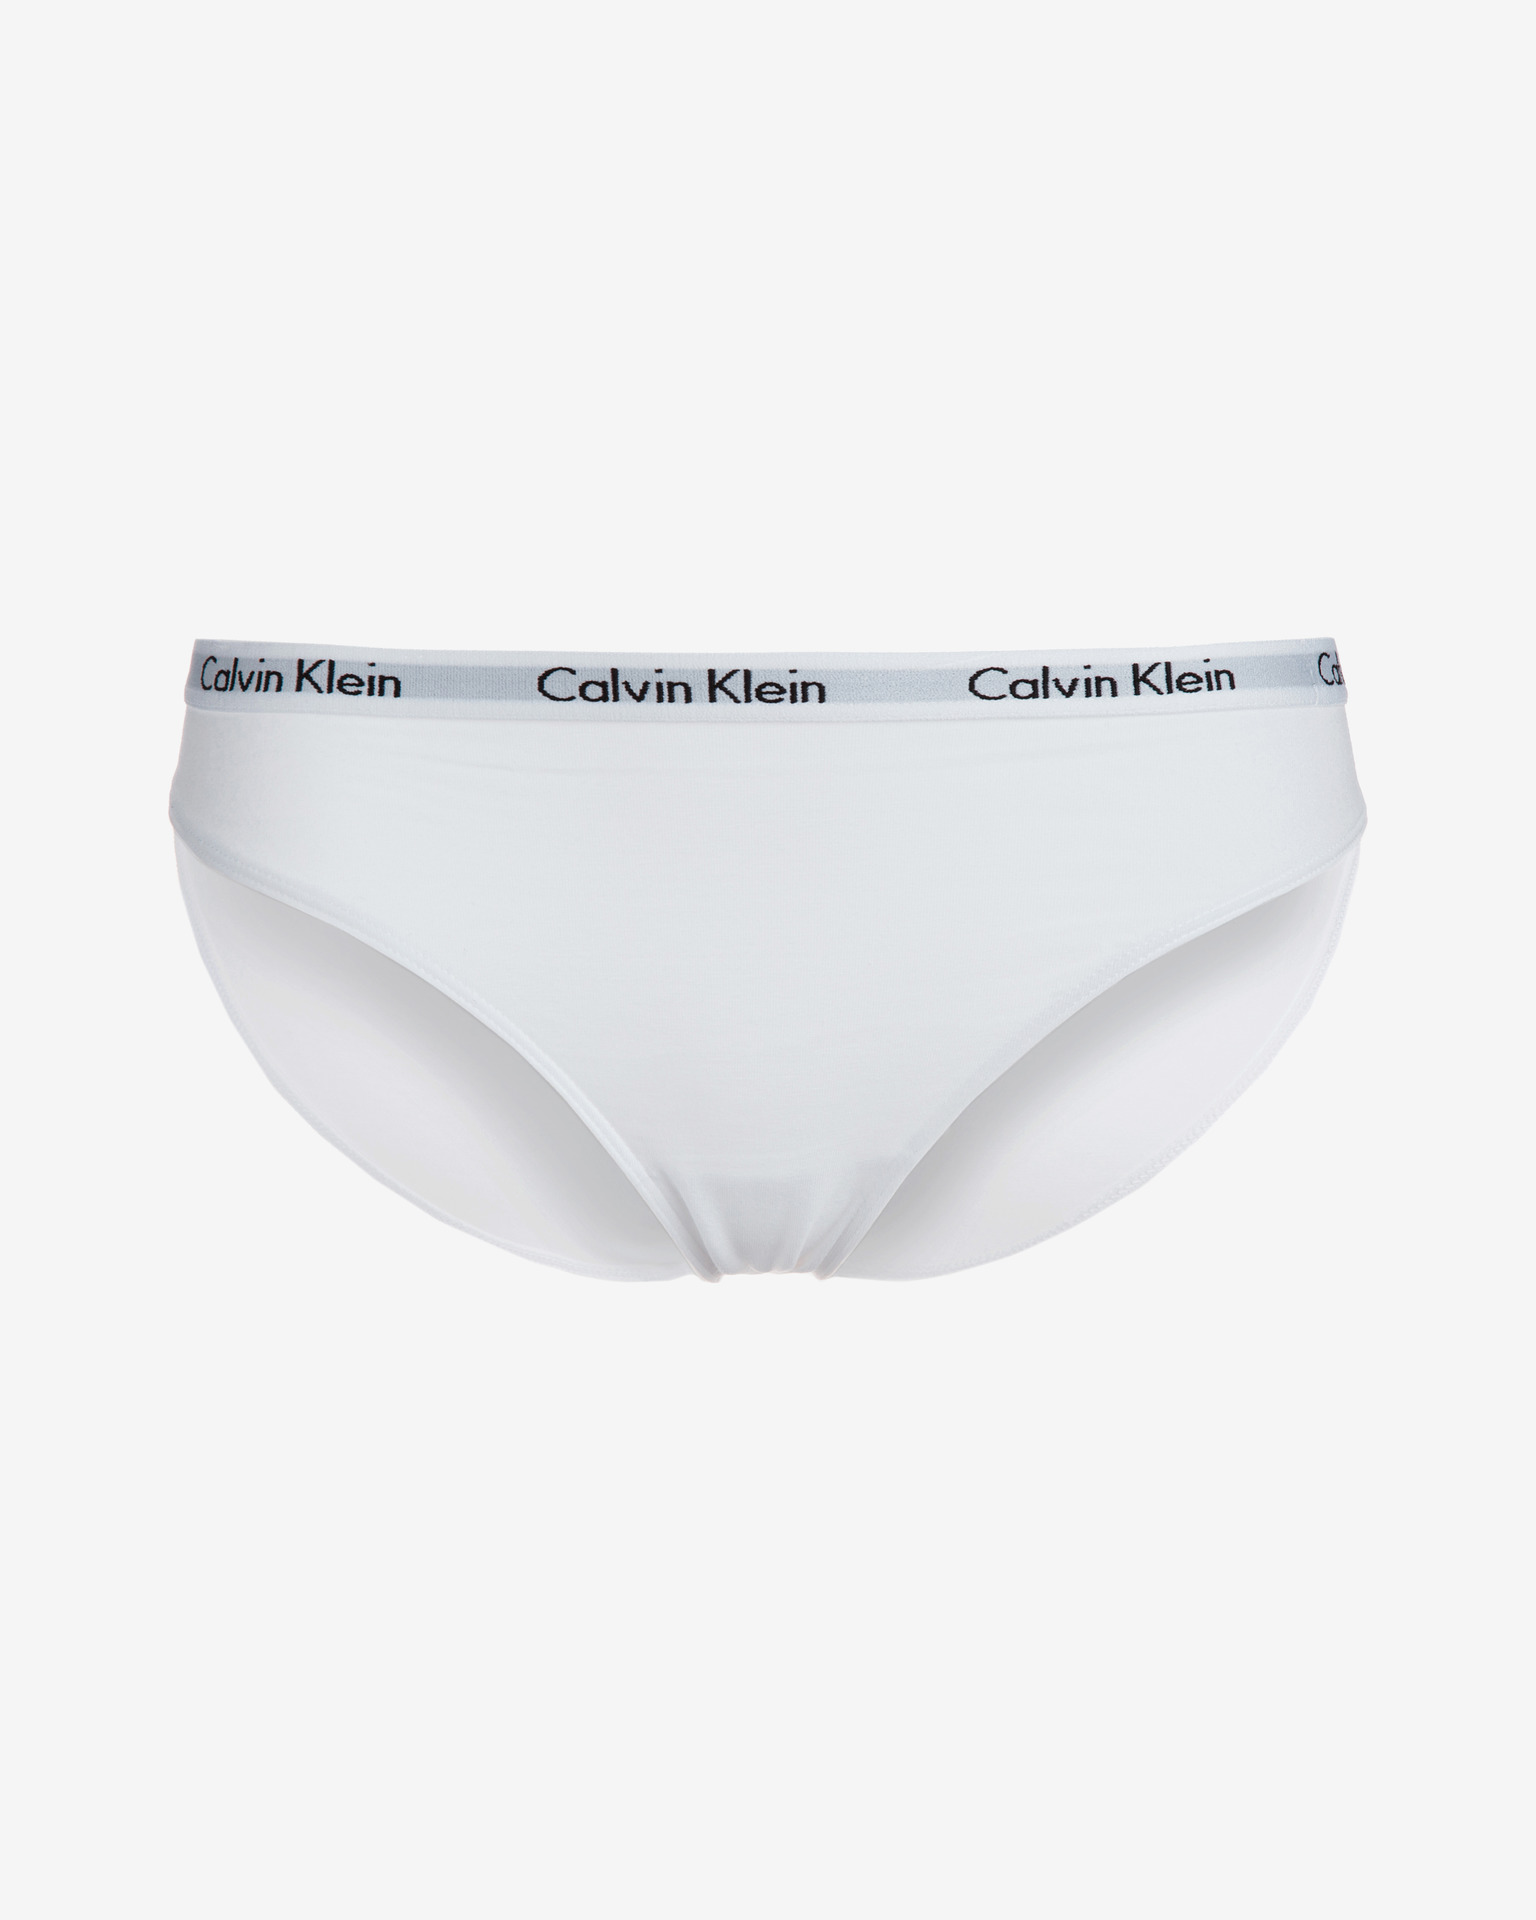 Fotografie Calvin Klein bílé kalhotky Bikini Slip - L